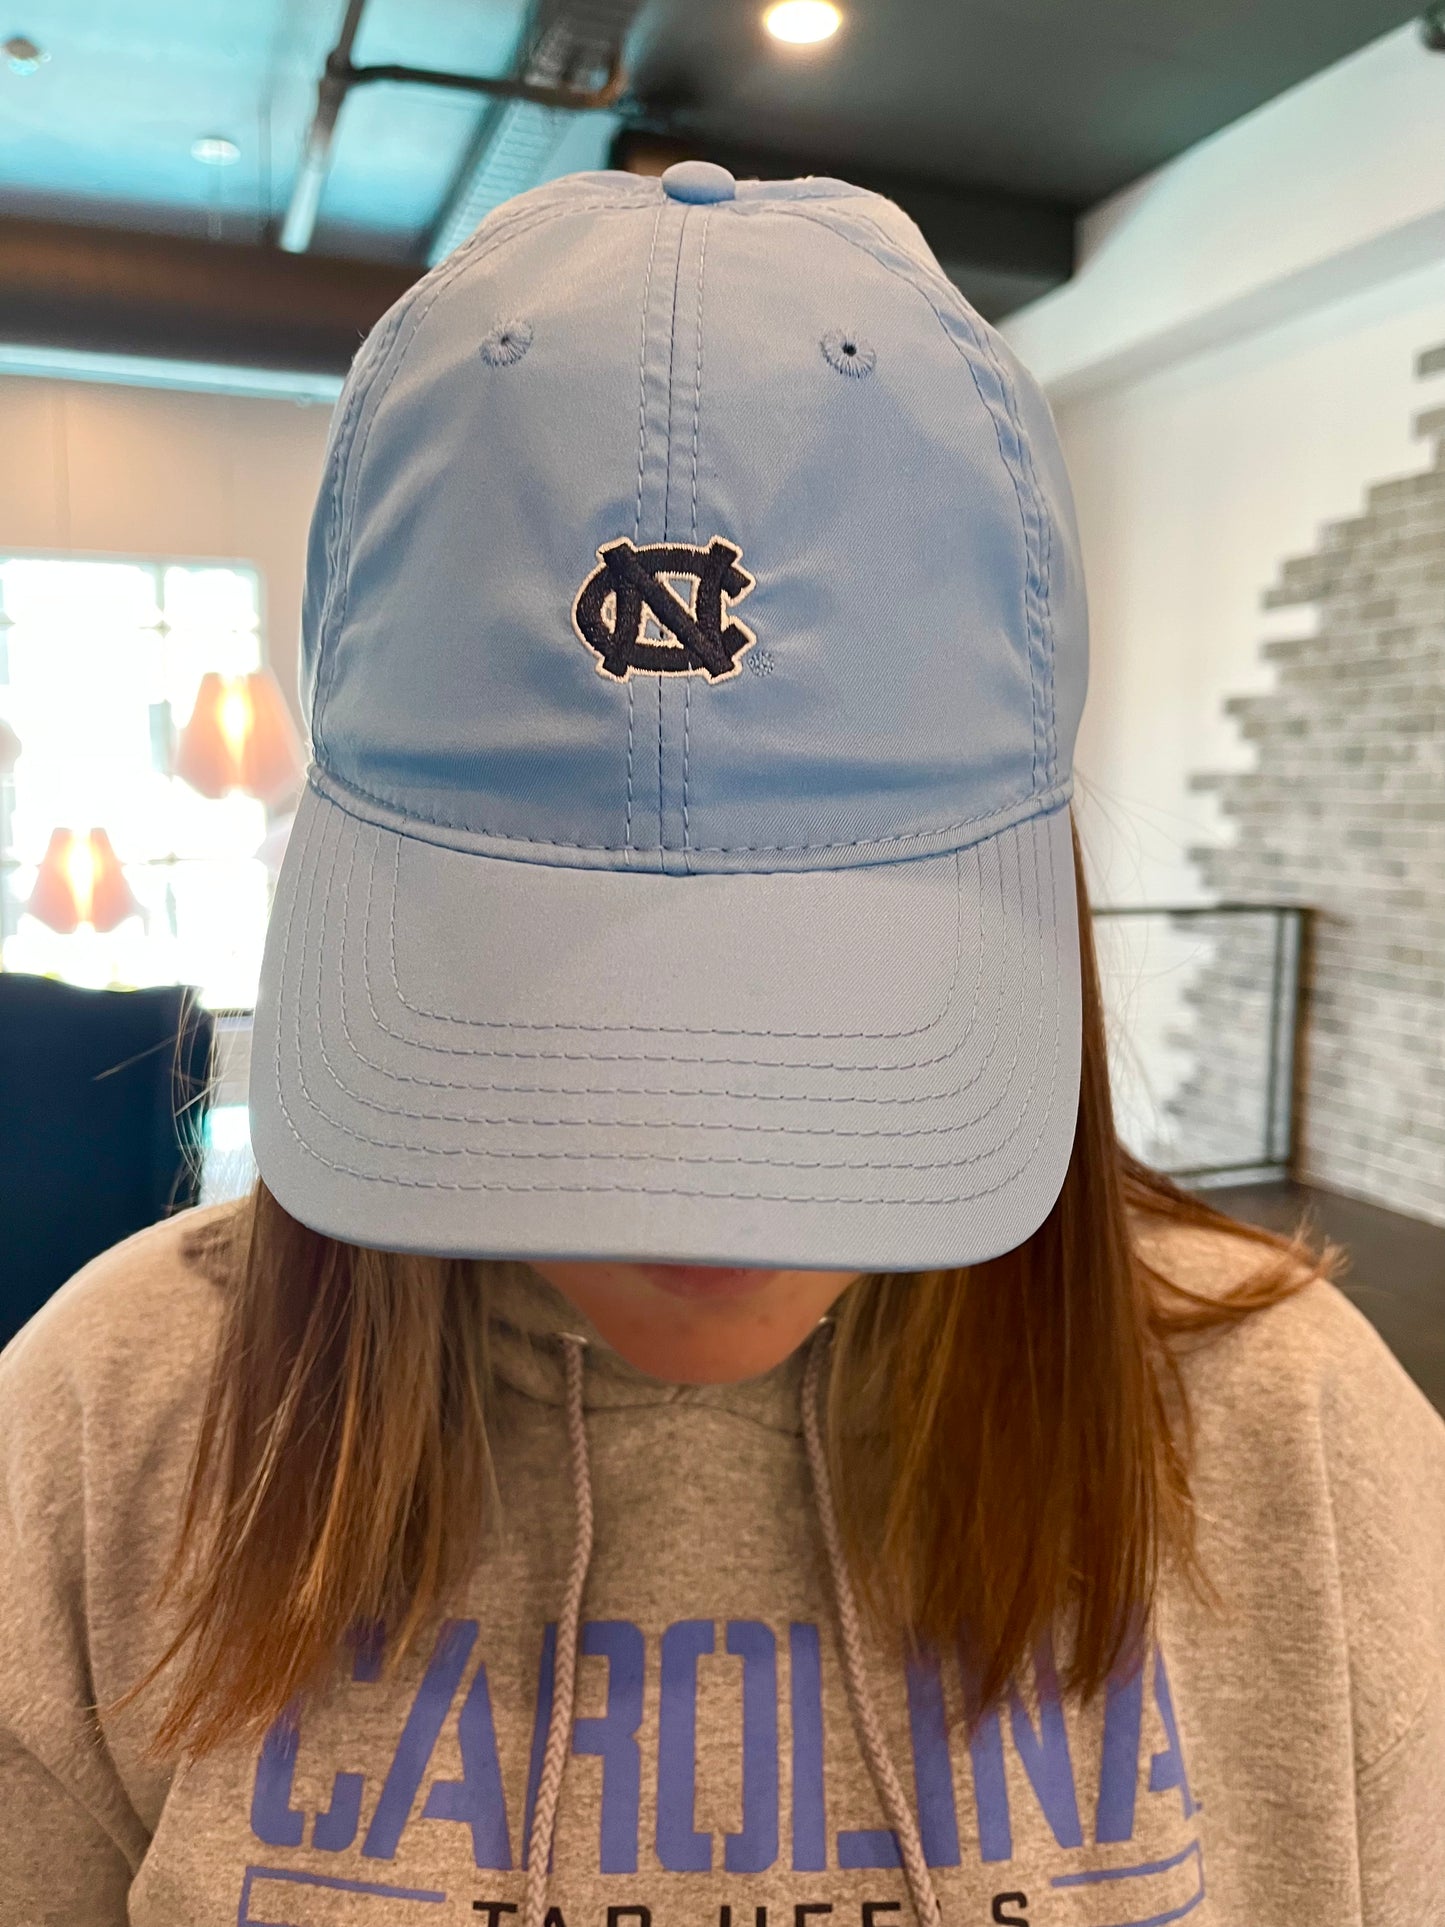 UNC Logo Dry Fit Hat in Carolina Blue